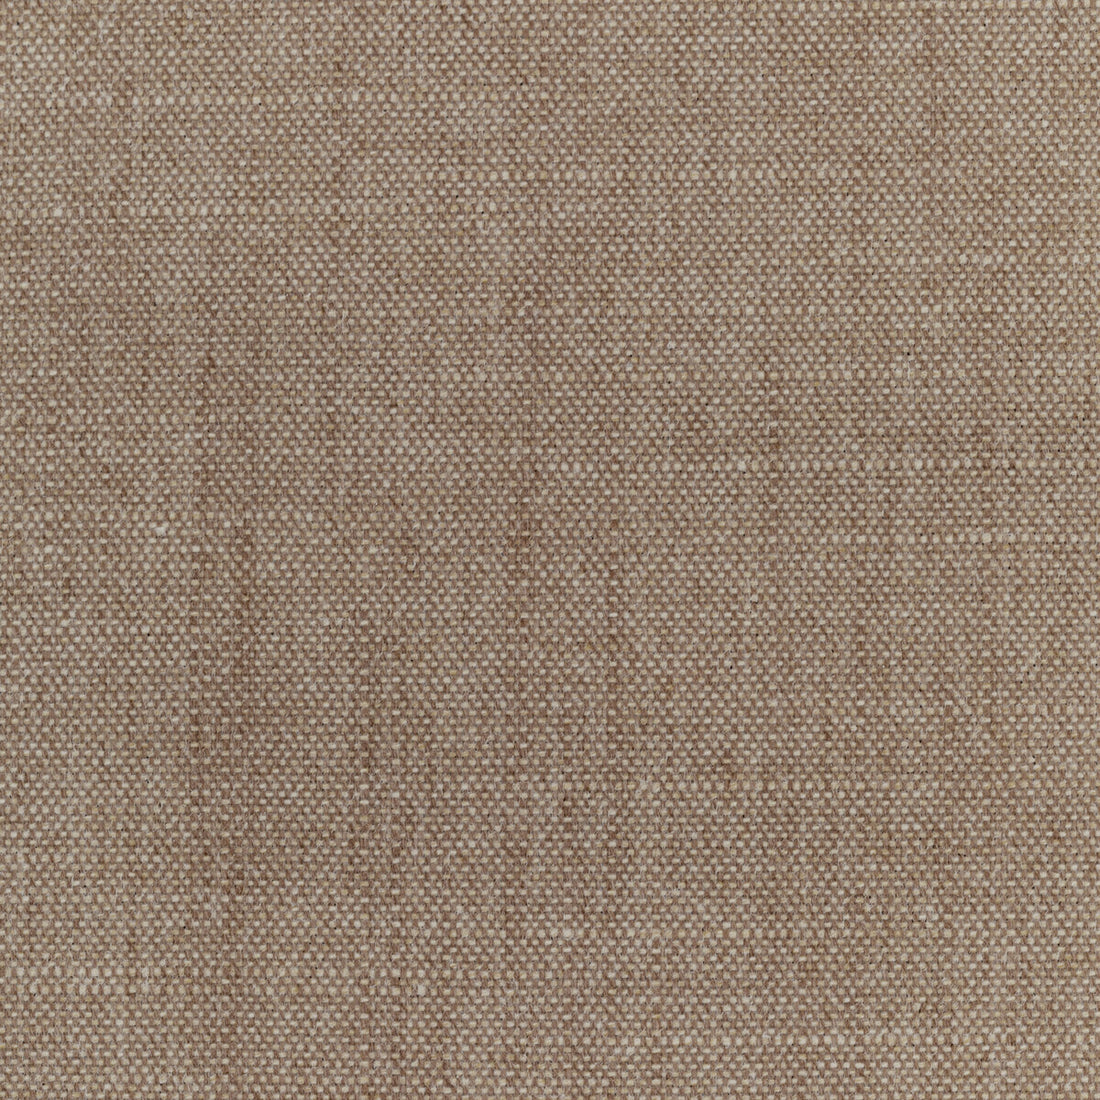 Kravet Smart fabric in 36112-6116 color - pattern 36112.6116.0 - by Kravet Smart in the Performance Kravetarmor collection